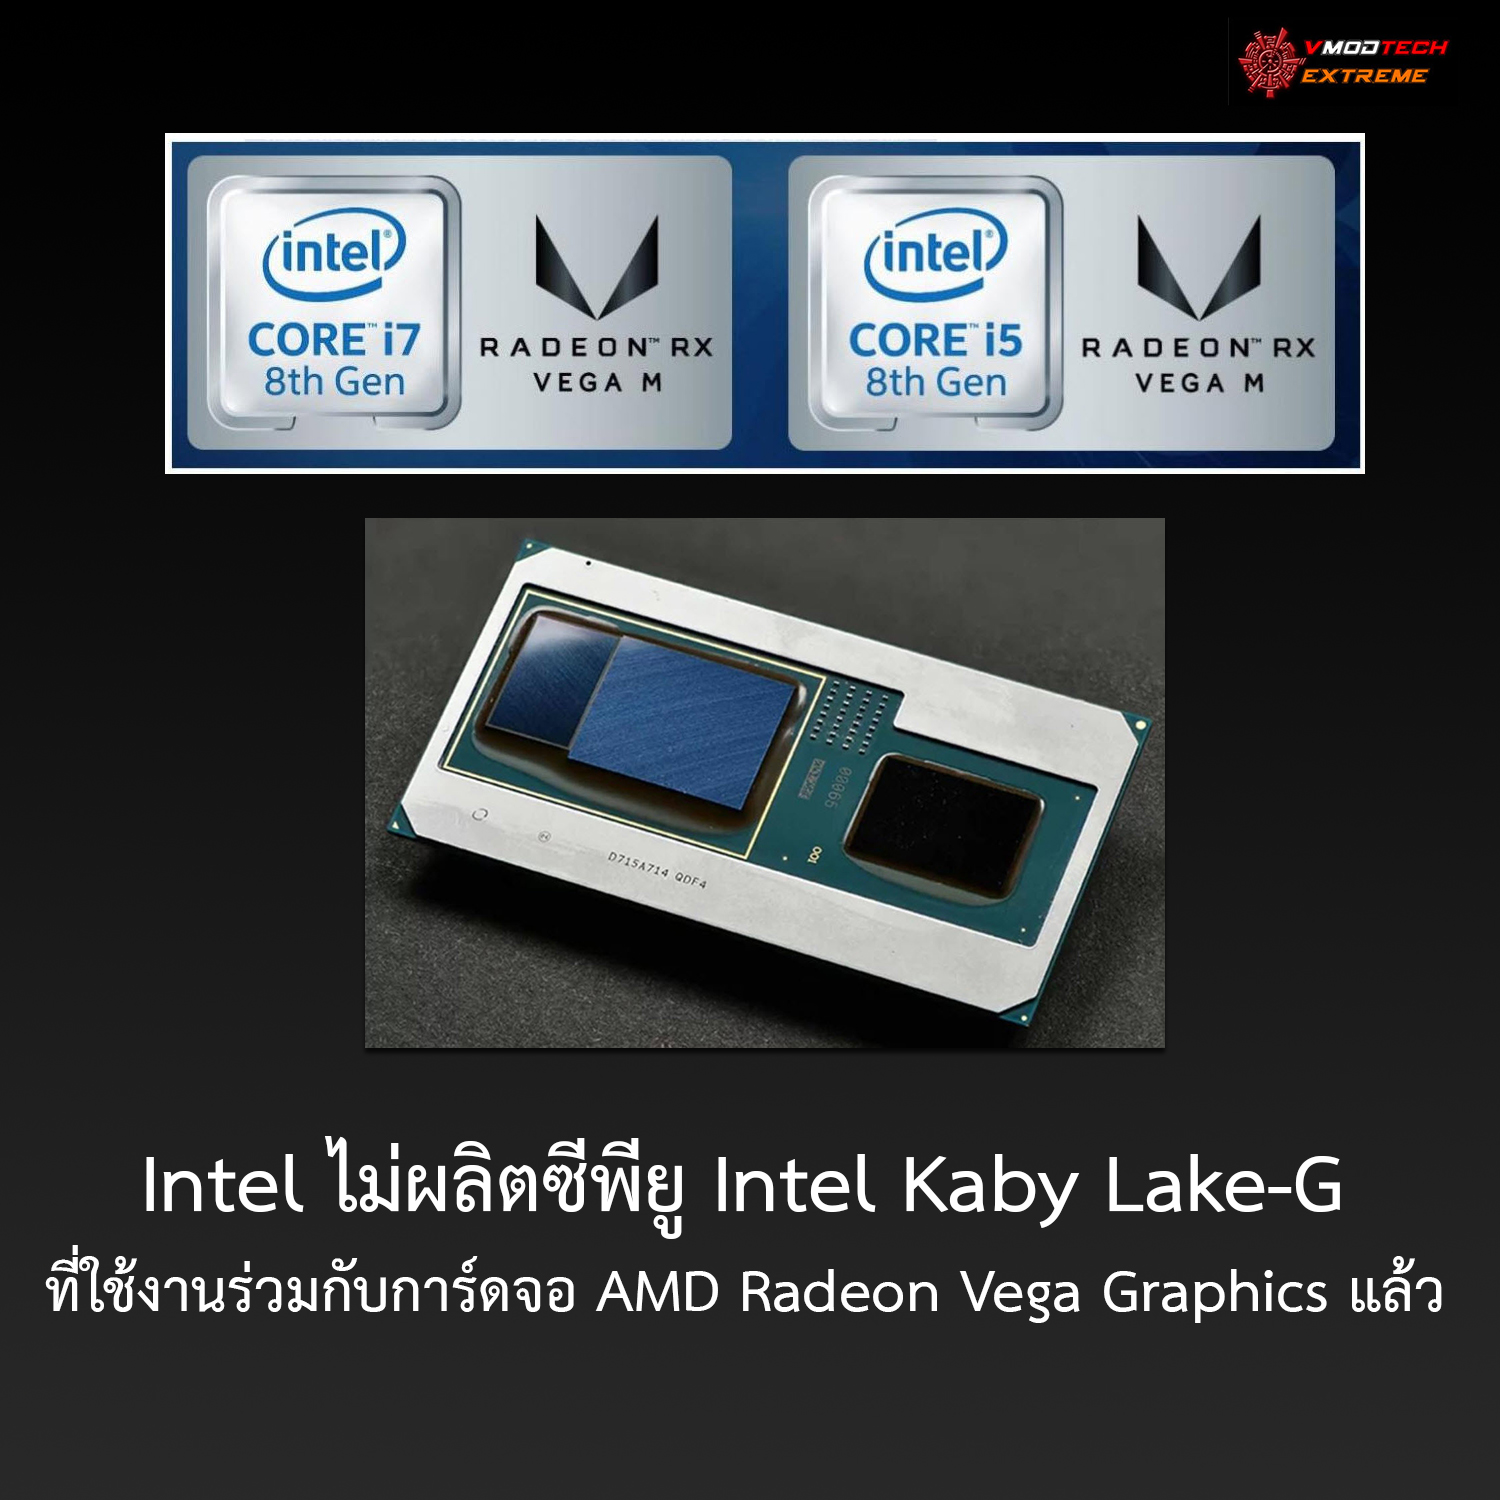 intel kaby lake g Intel ไม่ผลิตซีพียู Intel Kaby Lake G ที่ใช้งานร่วมกับการ์ดจอ AMD Radeon Vega Graphics แล้ว